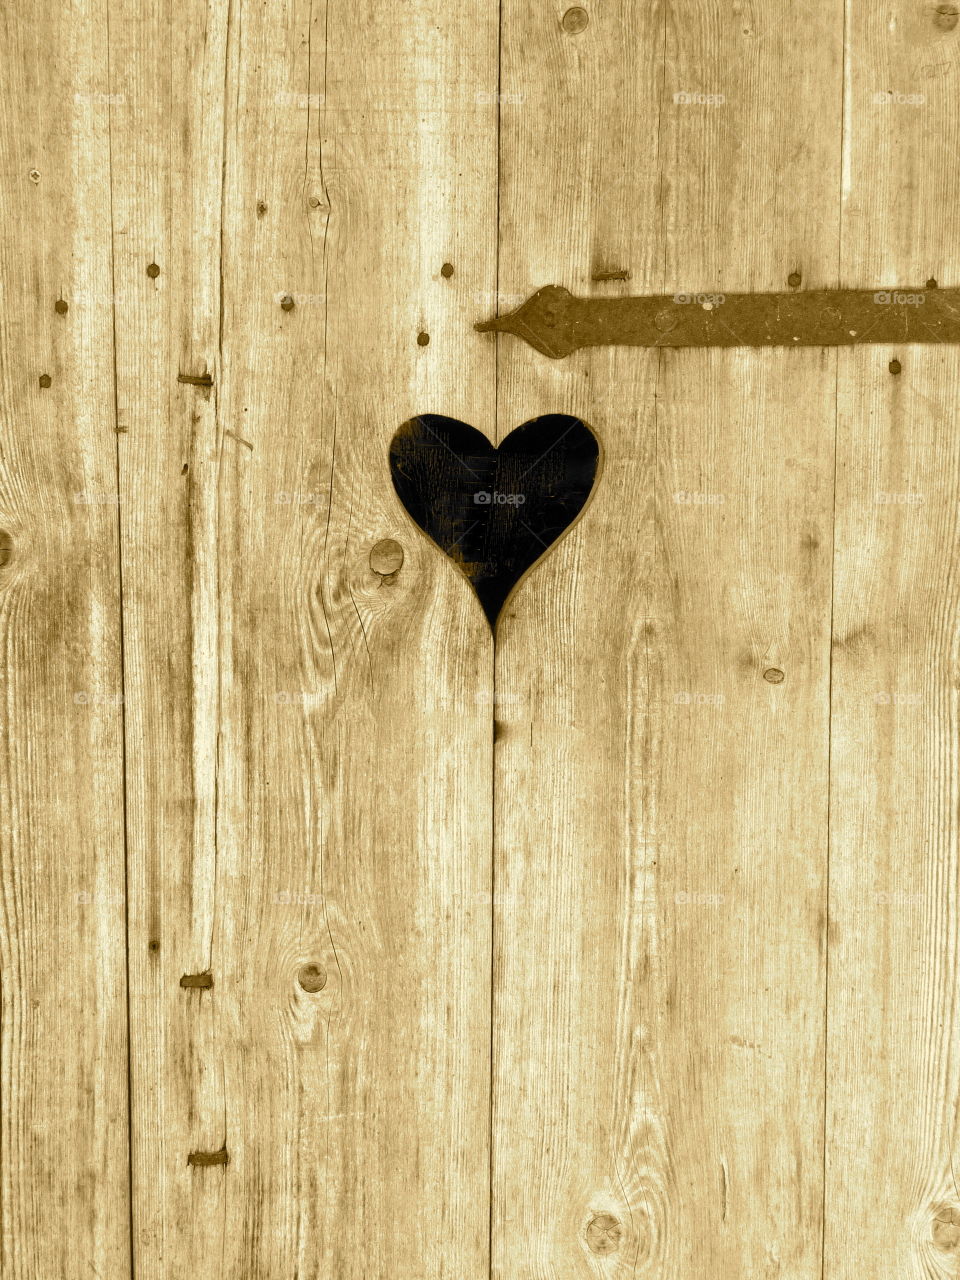 Heart shape on wooden surface